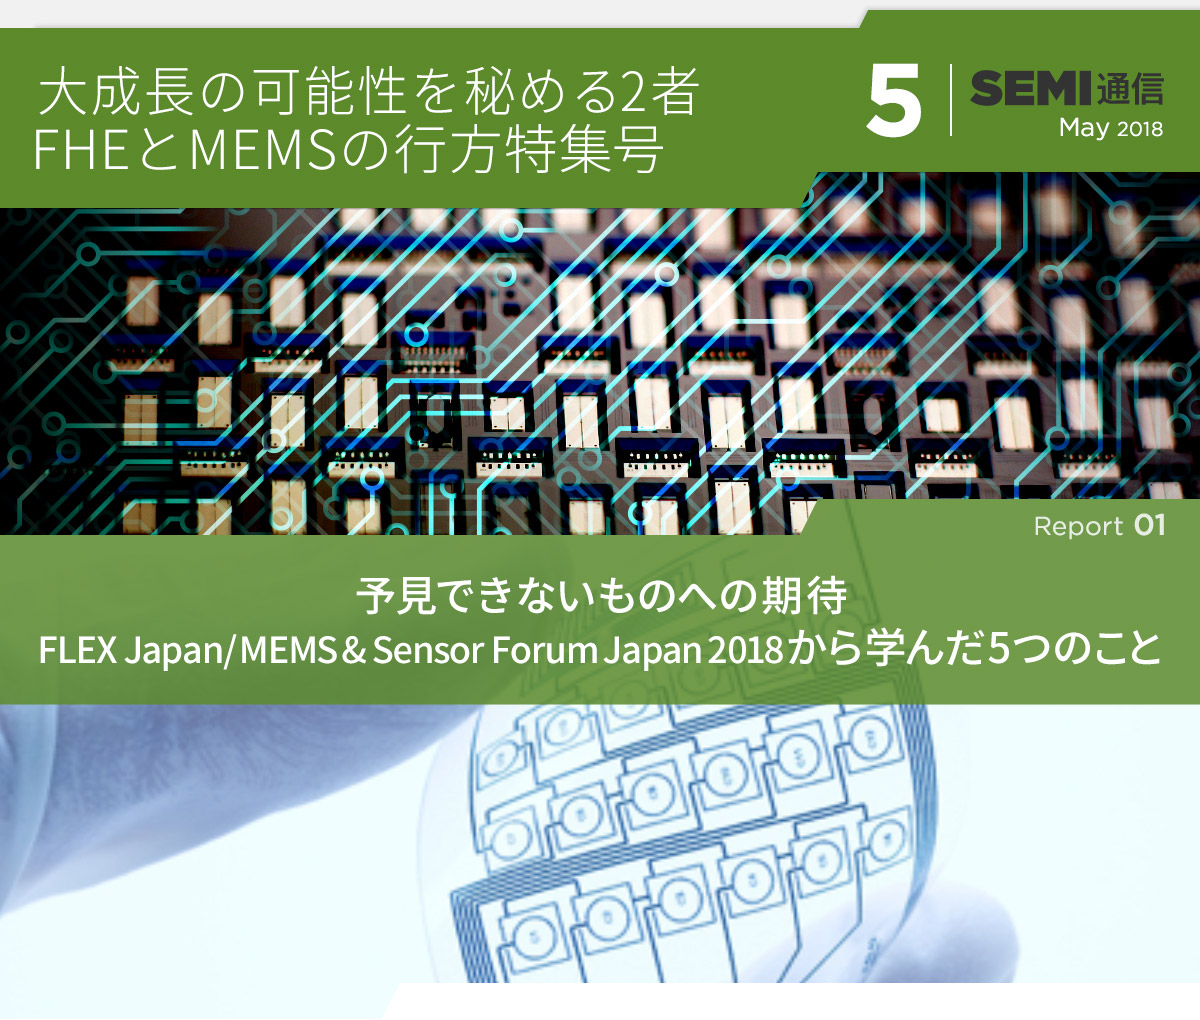 semi通信 5 大成長の可能性を秘める2者　FHEとMEMSの行方特集号 【Report 1】予見できないものへの期待　FLEX Japan/MEMS & Sensor Forum Japan 2018から学んだ5つのこと